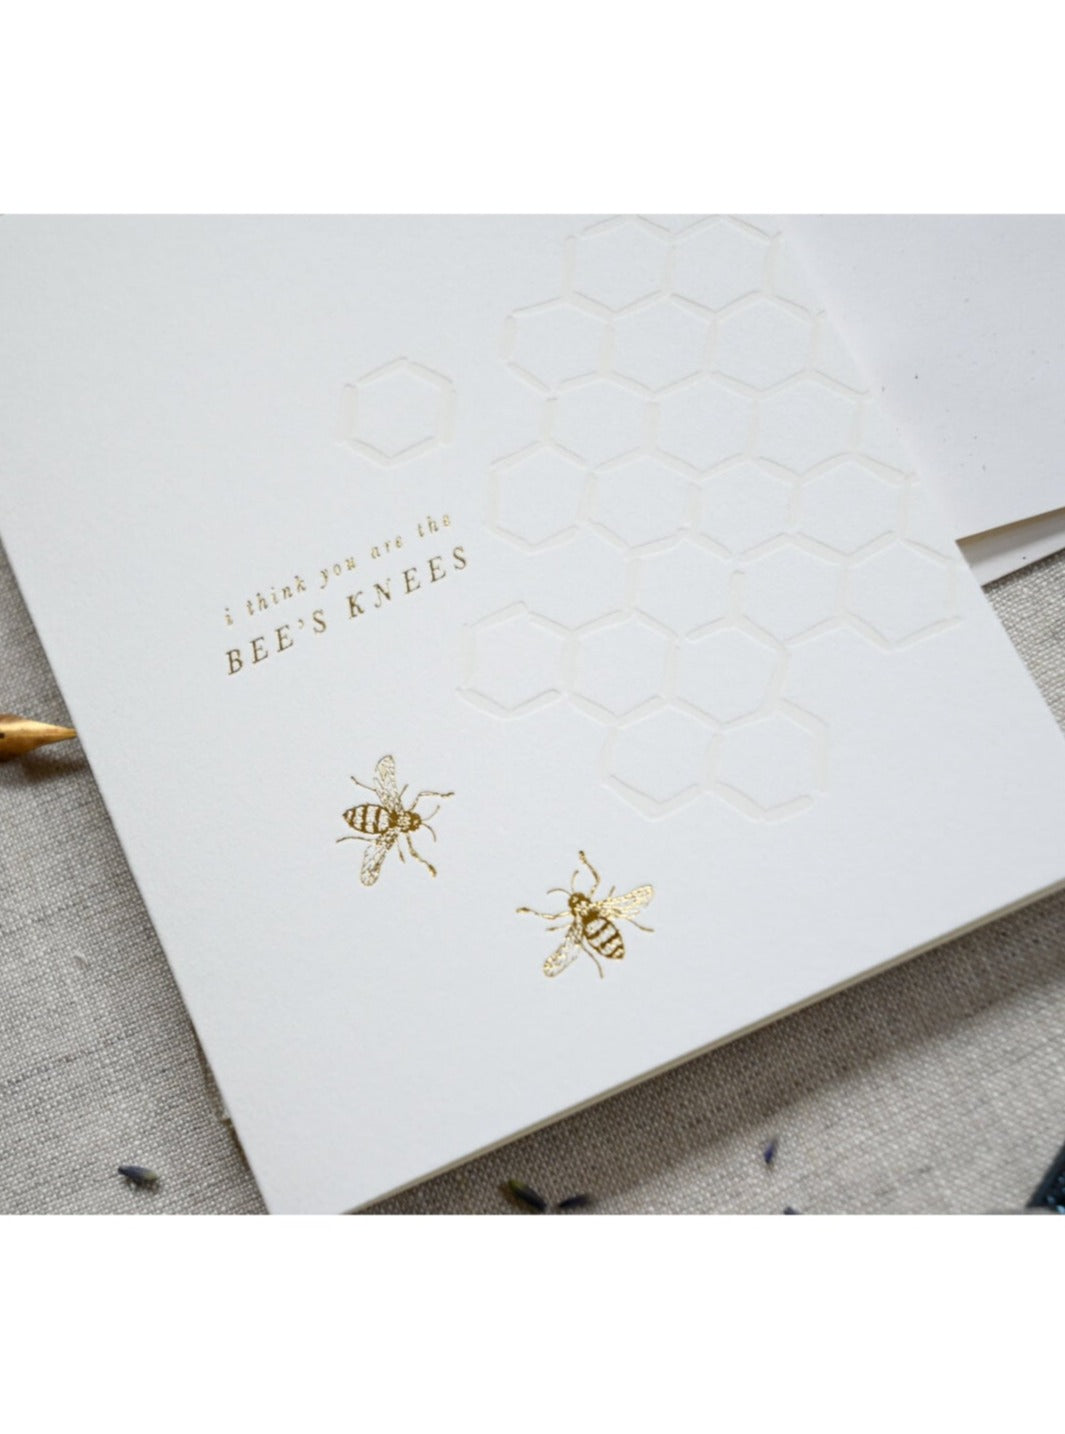 Bee's Knees Greeting Card